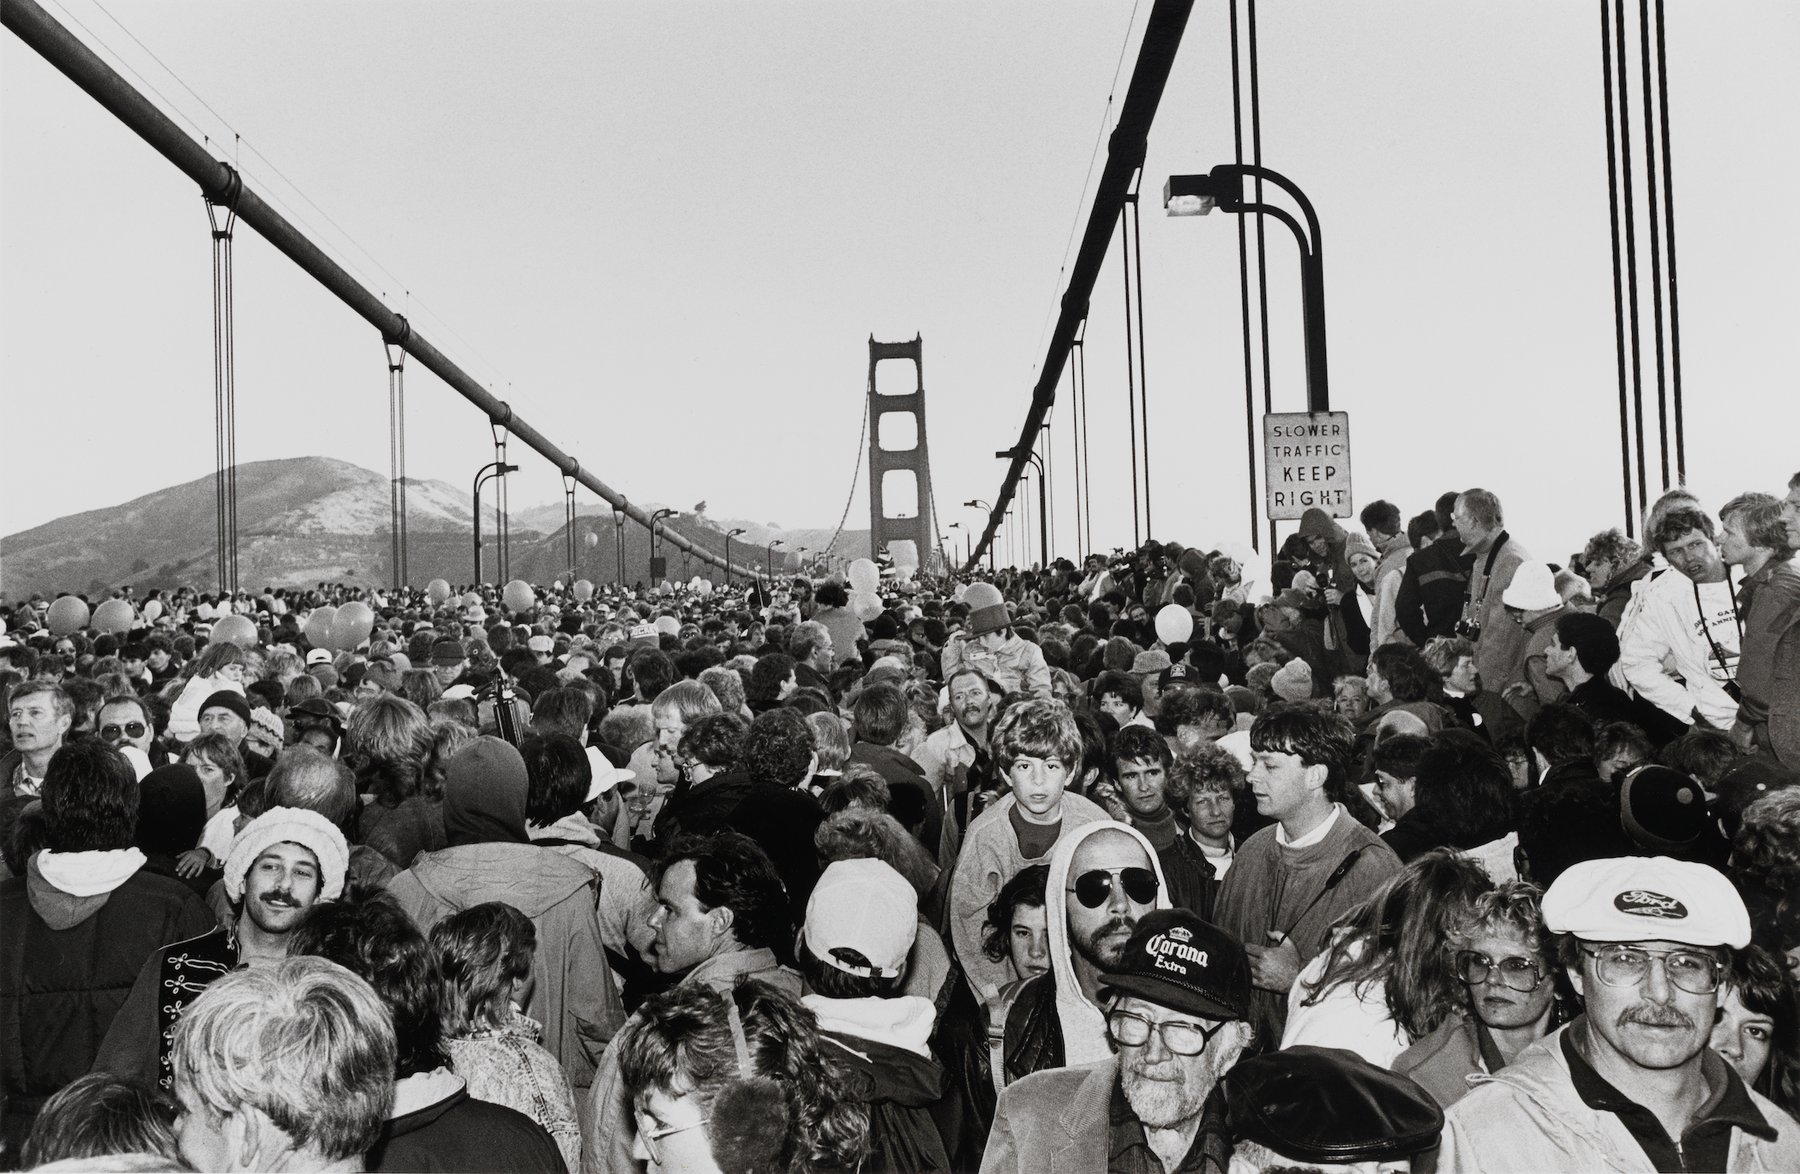 Michael Jang, Golden Gate Bridge Fiftieth Anniversary, 1987